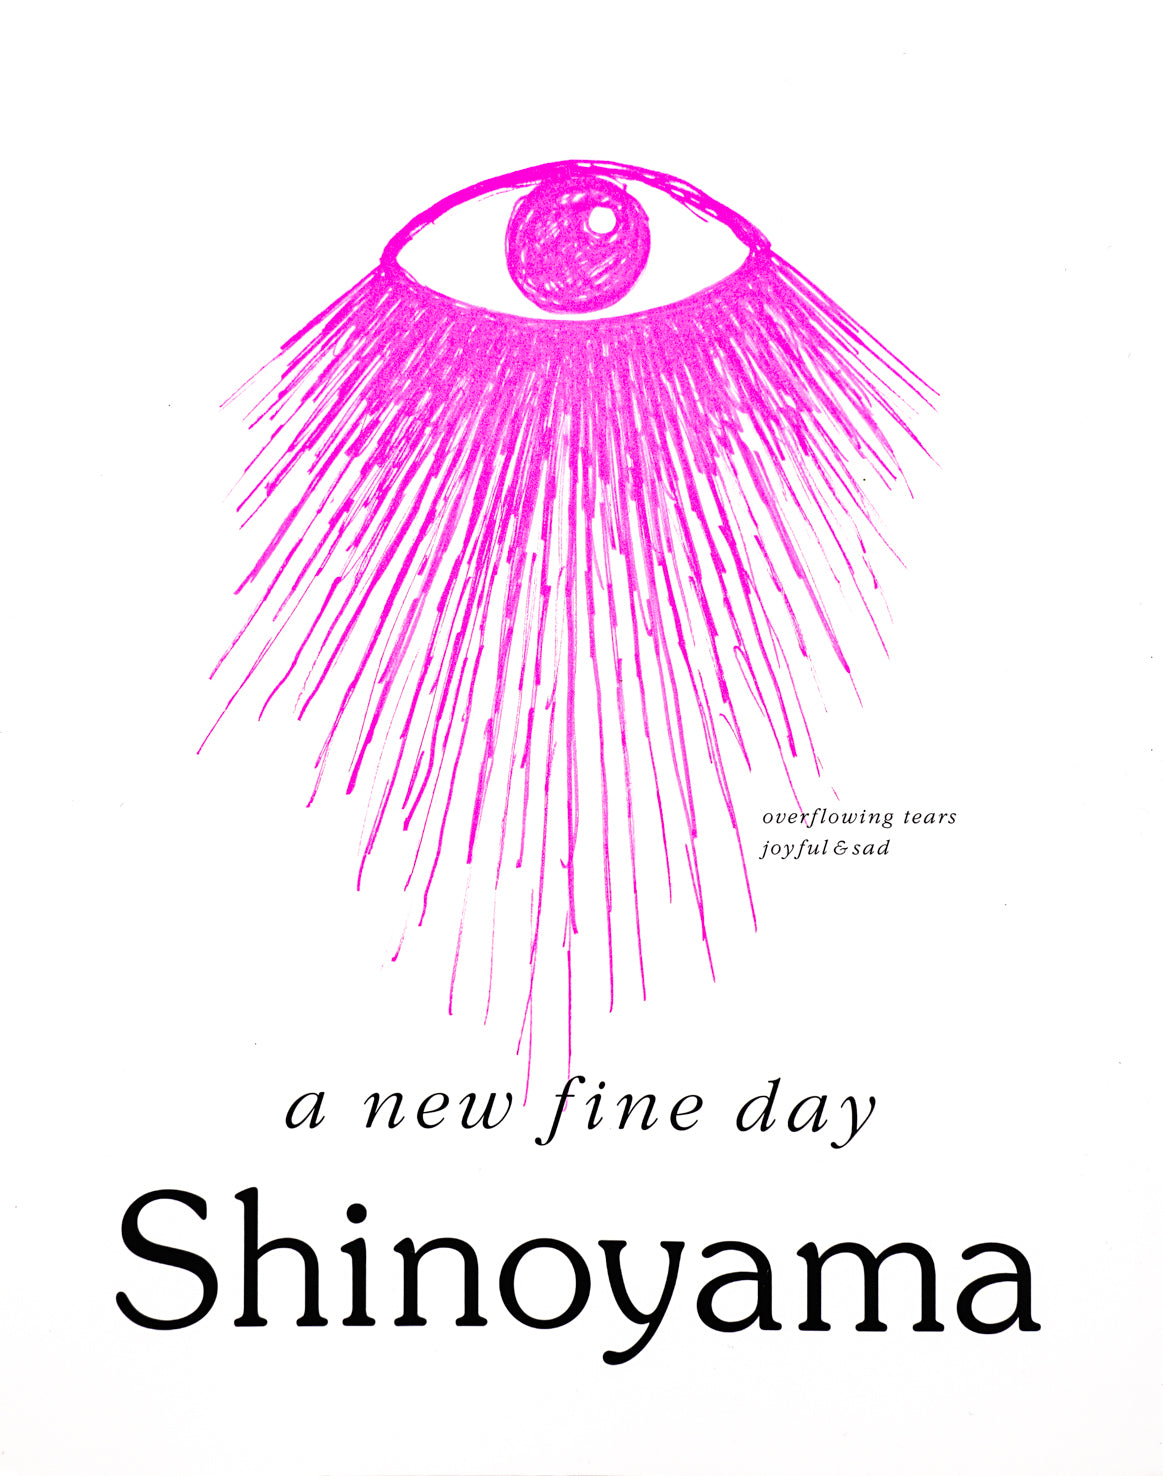 Shinoyama - A New Fine Day